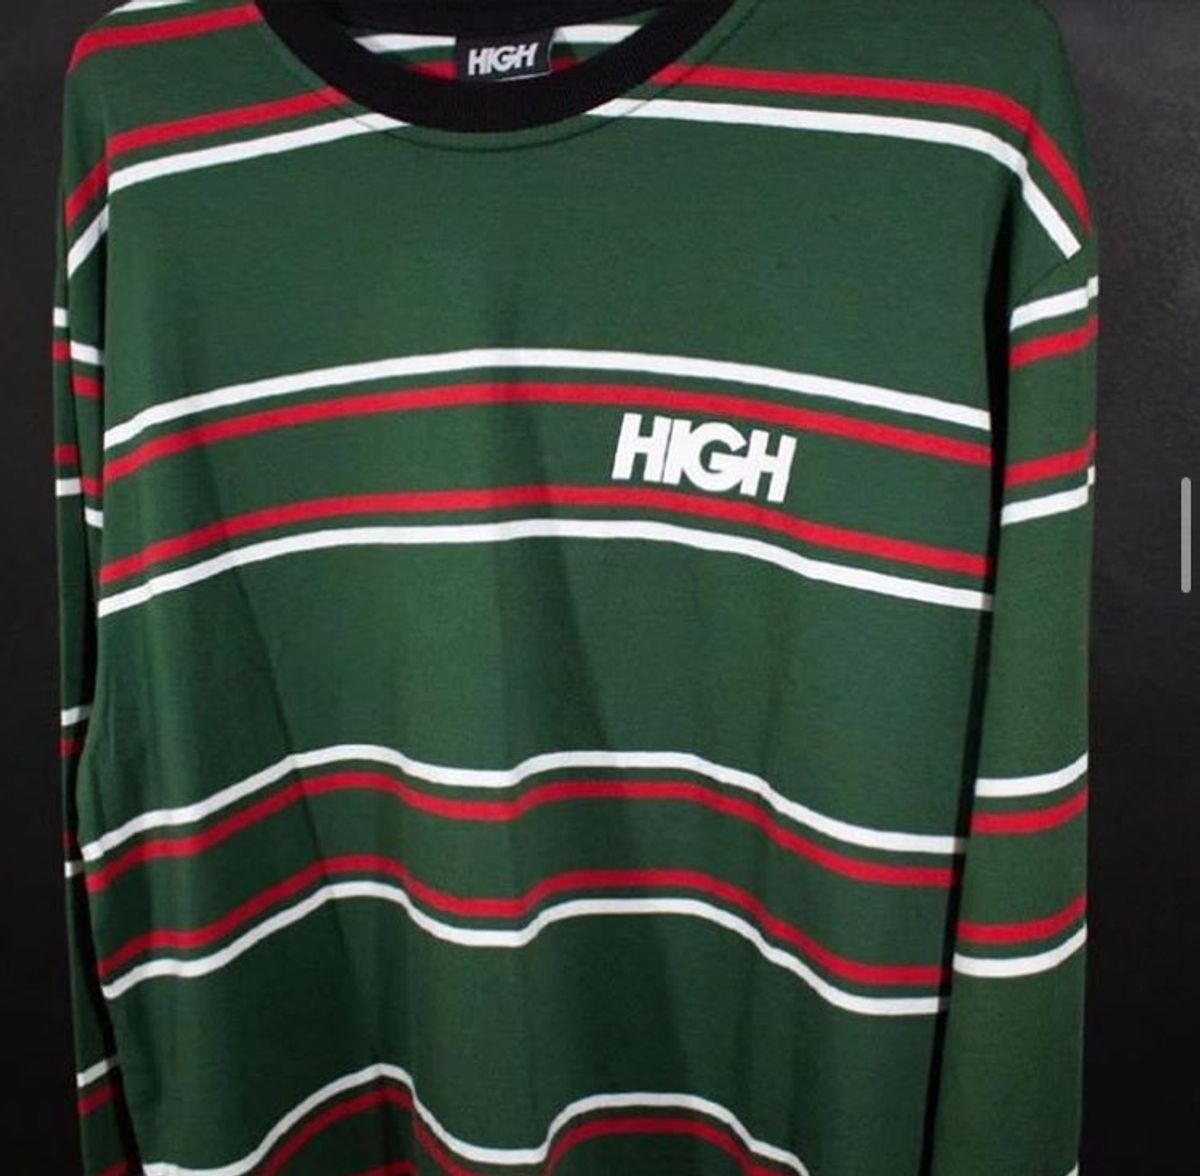 Download High Company | Camisa Masculina High Company Usado ...